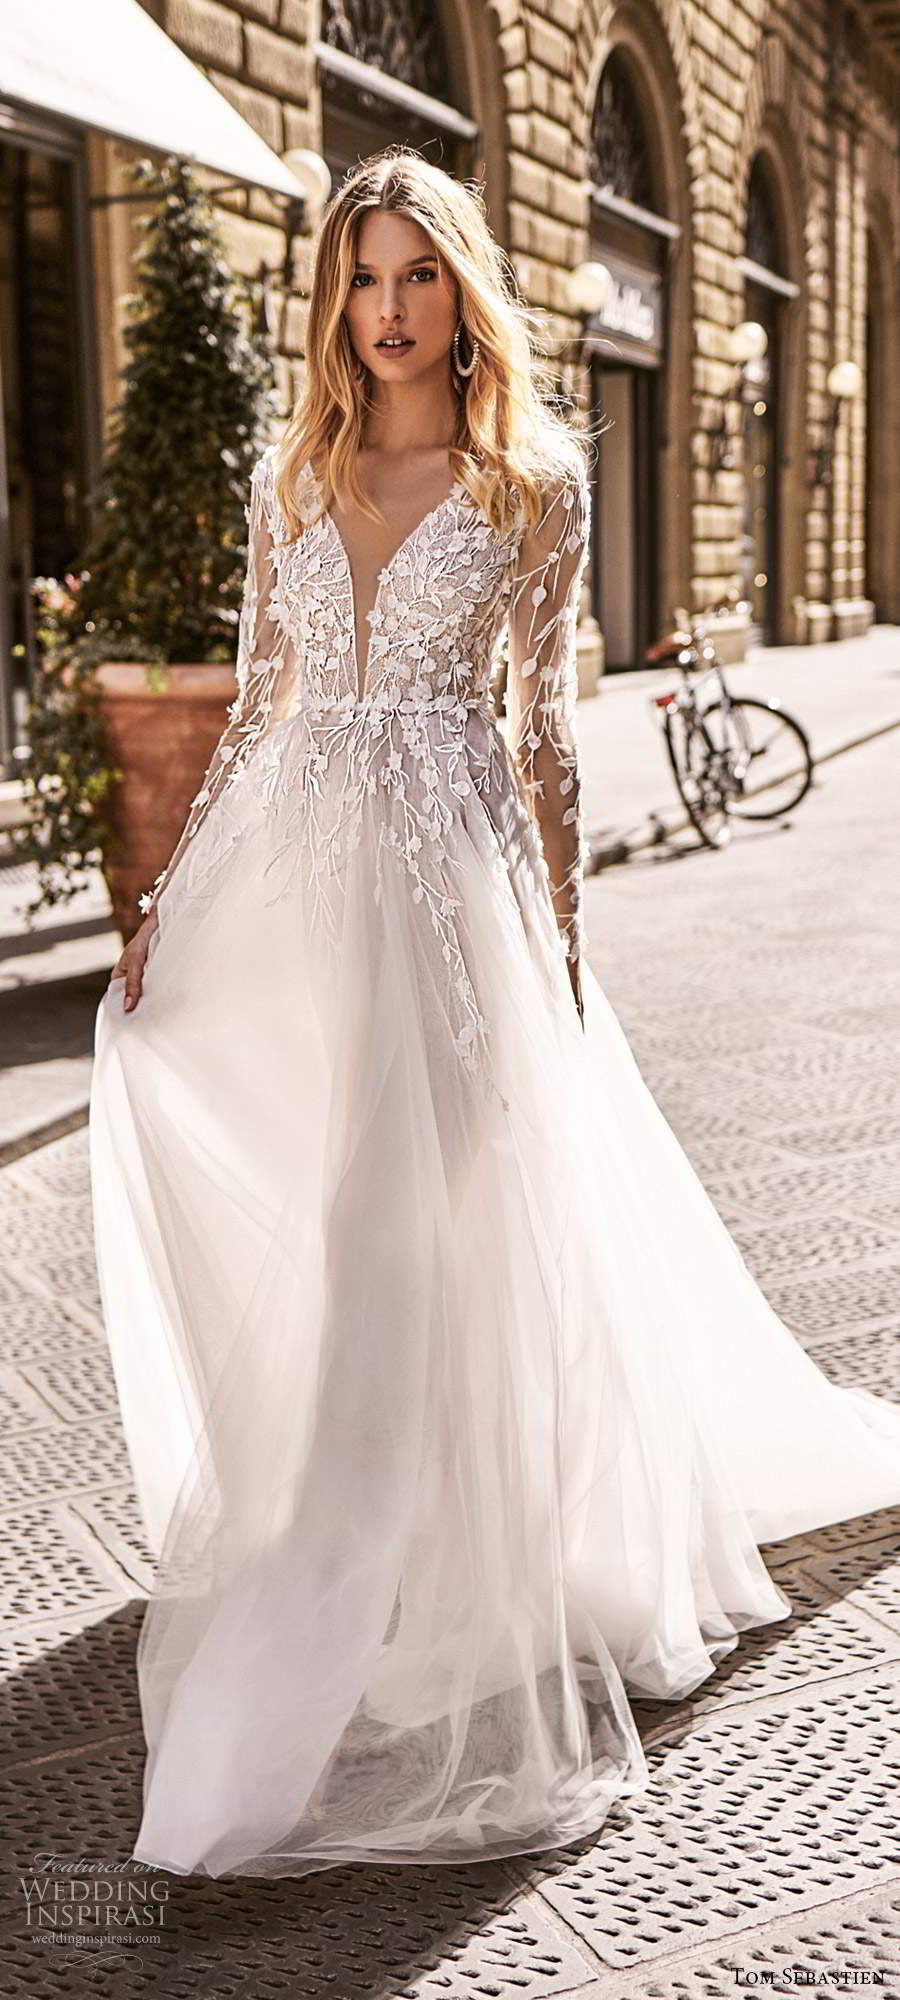 tom sebastien 2020 bridal illusion long sleeves plunging v neckline heavily embellished a line ball gown wedding dress v back chapel train (14) mv